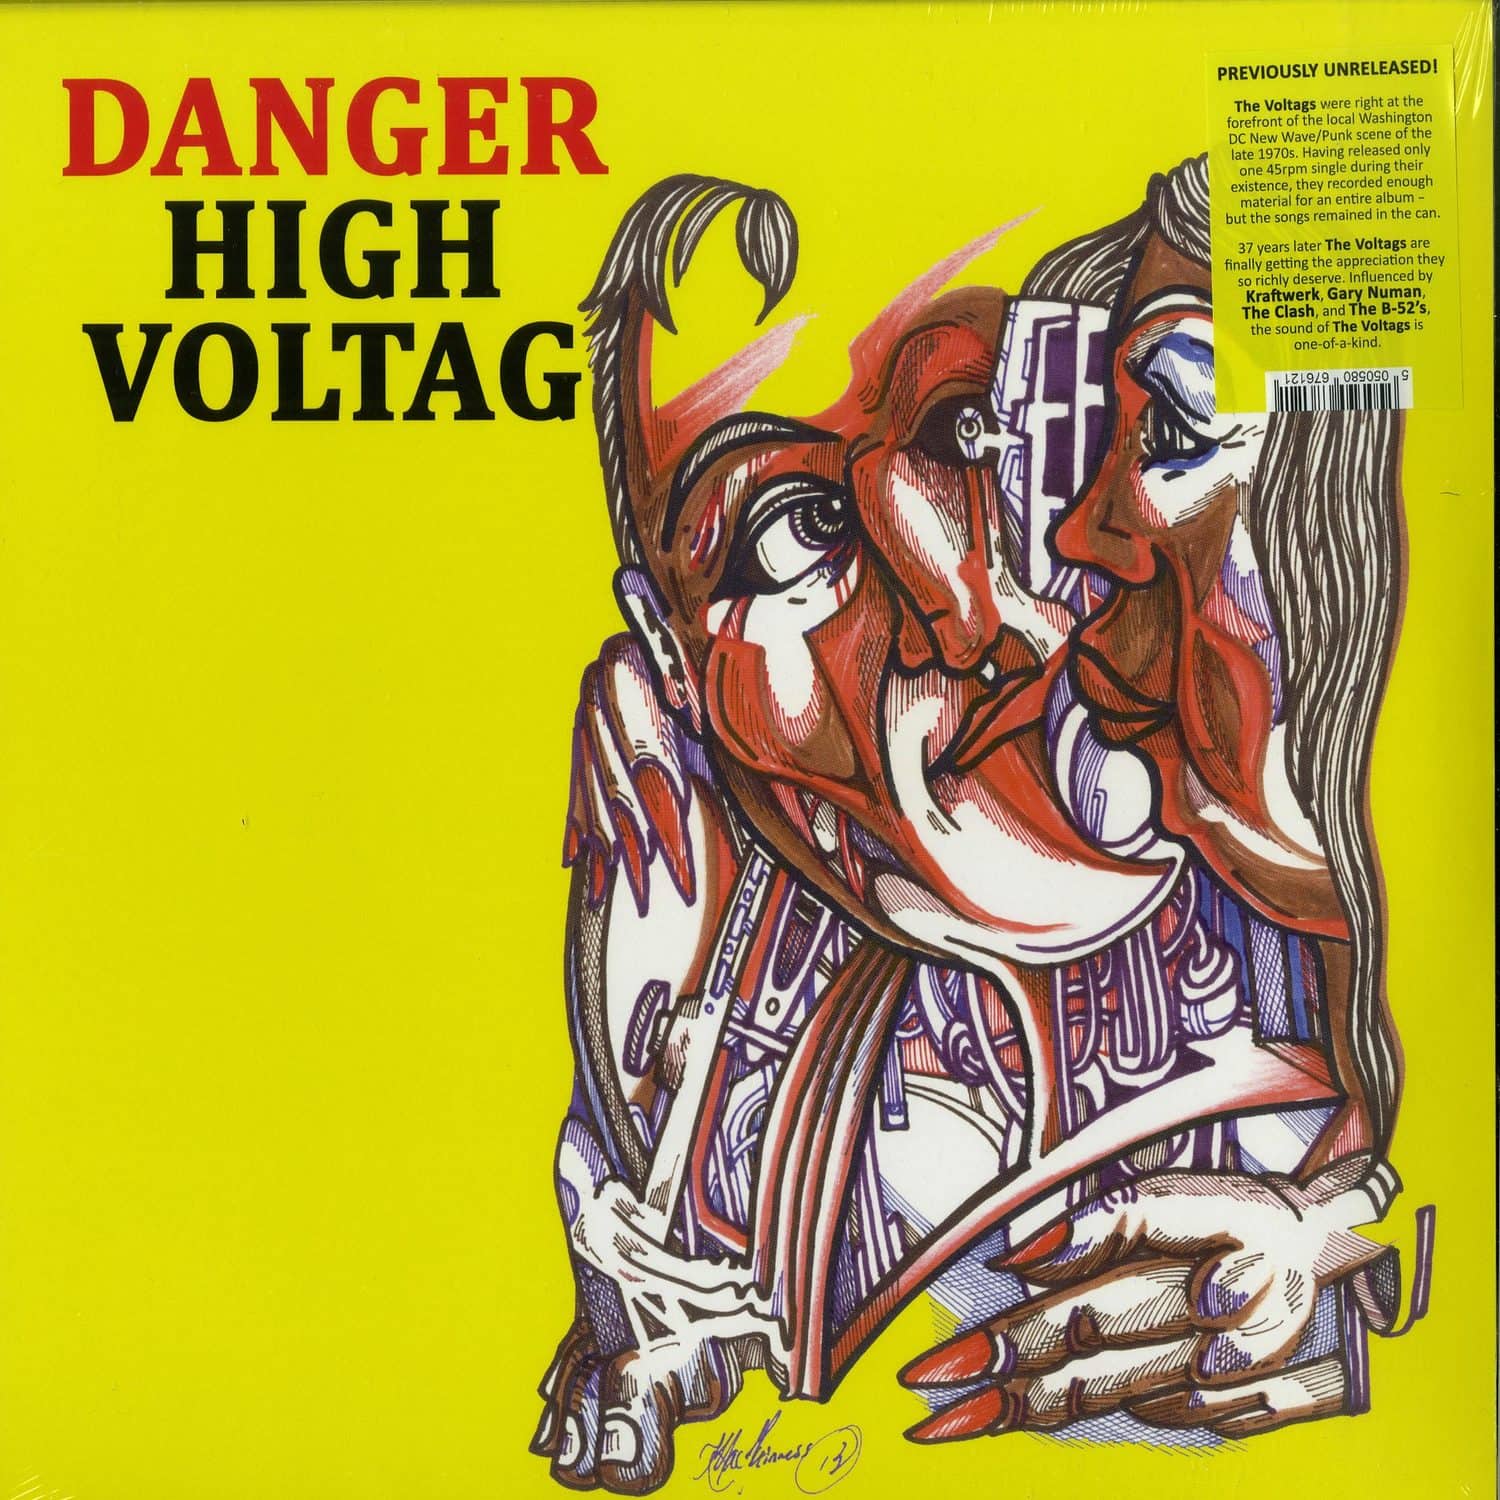 The Voltags - DANGER HIGH VOLTAG